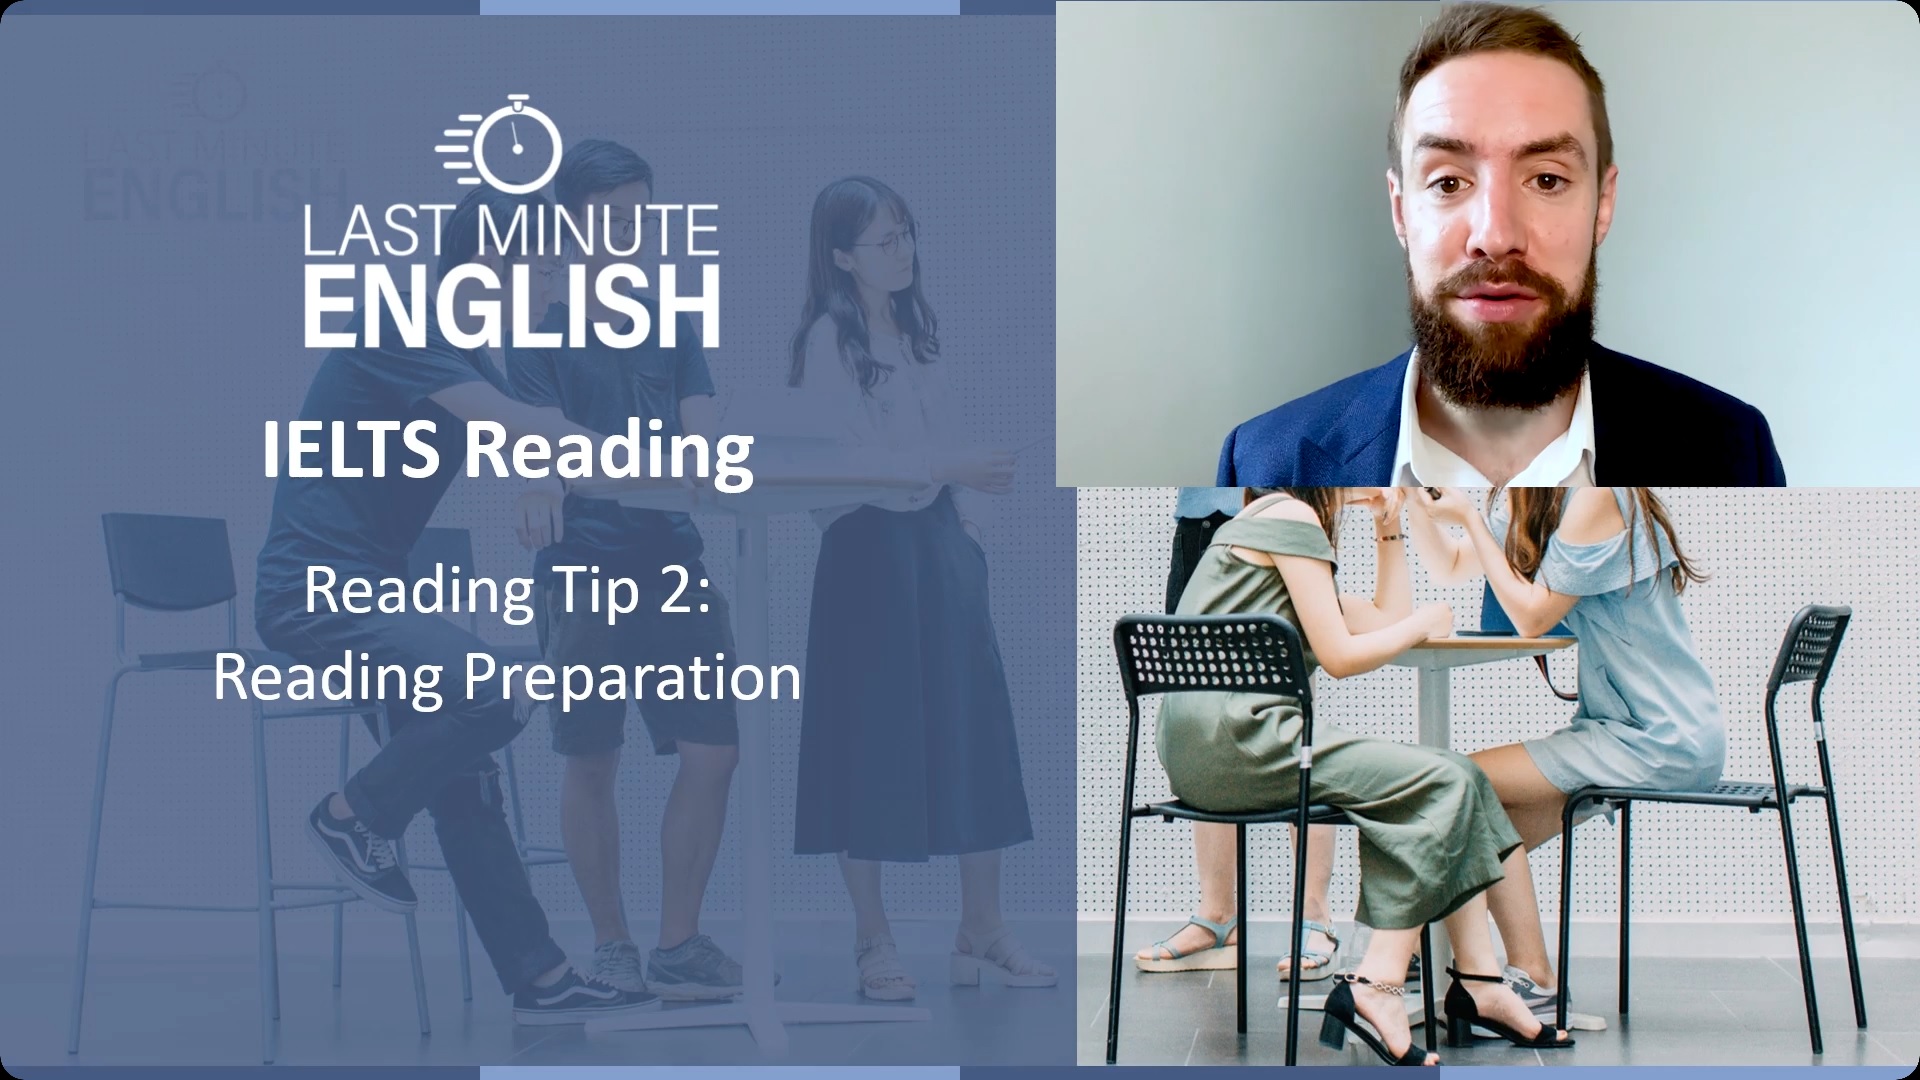 IELTS Reading - Tip 2 - Reading Preparation